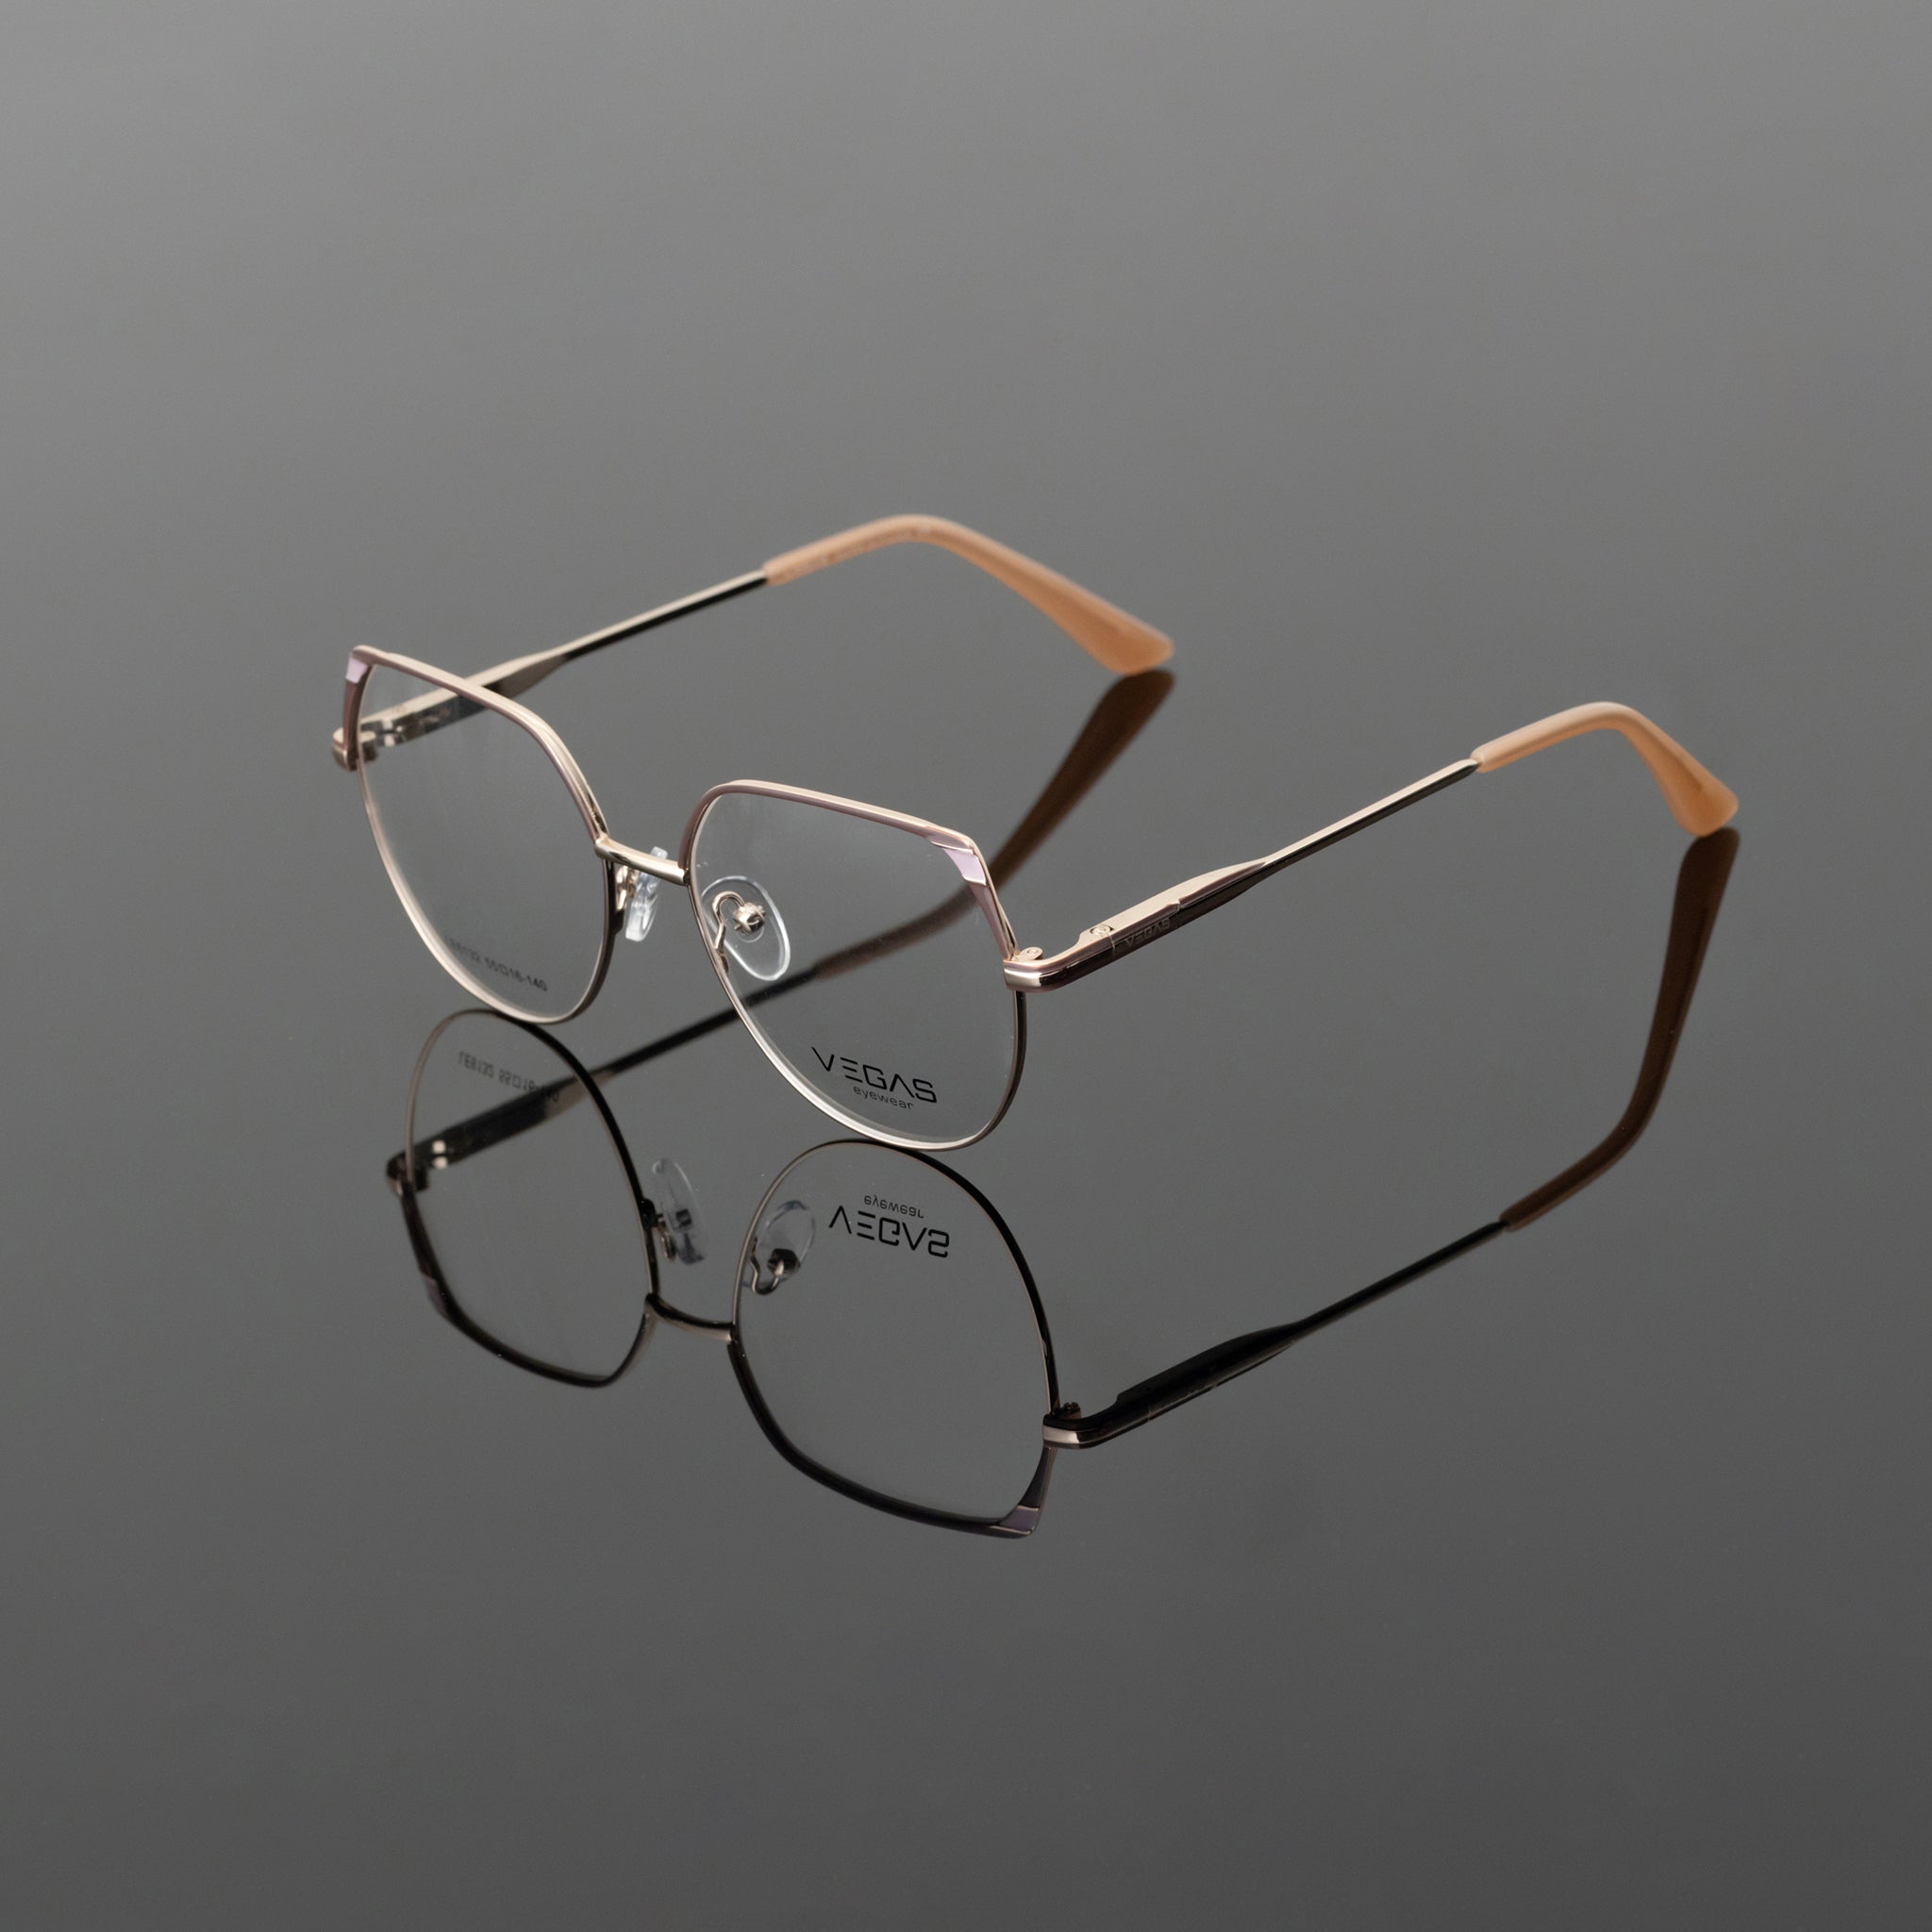 VEGAS LE6132 eyeglasses - COC Eyewear